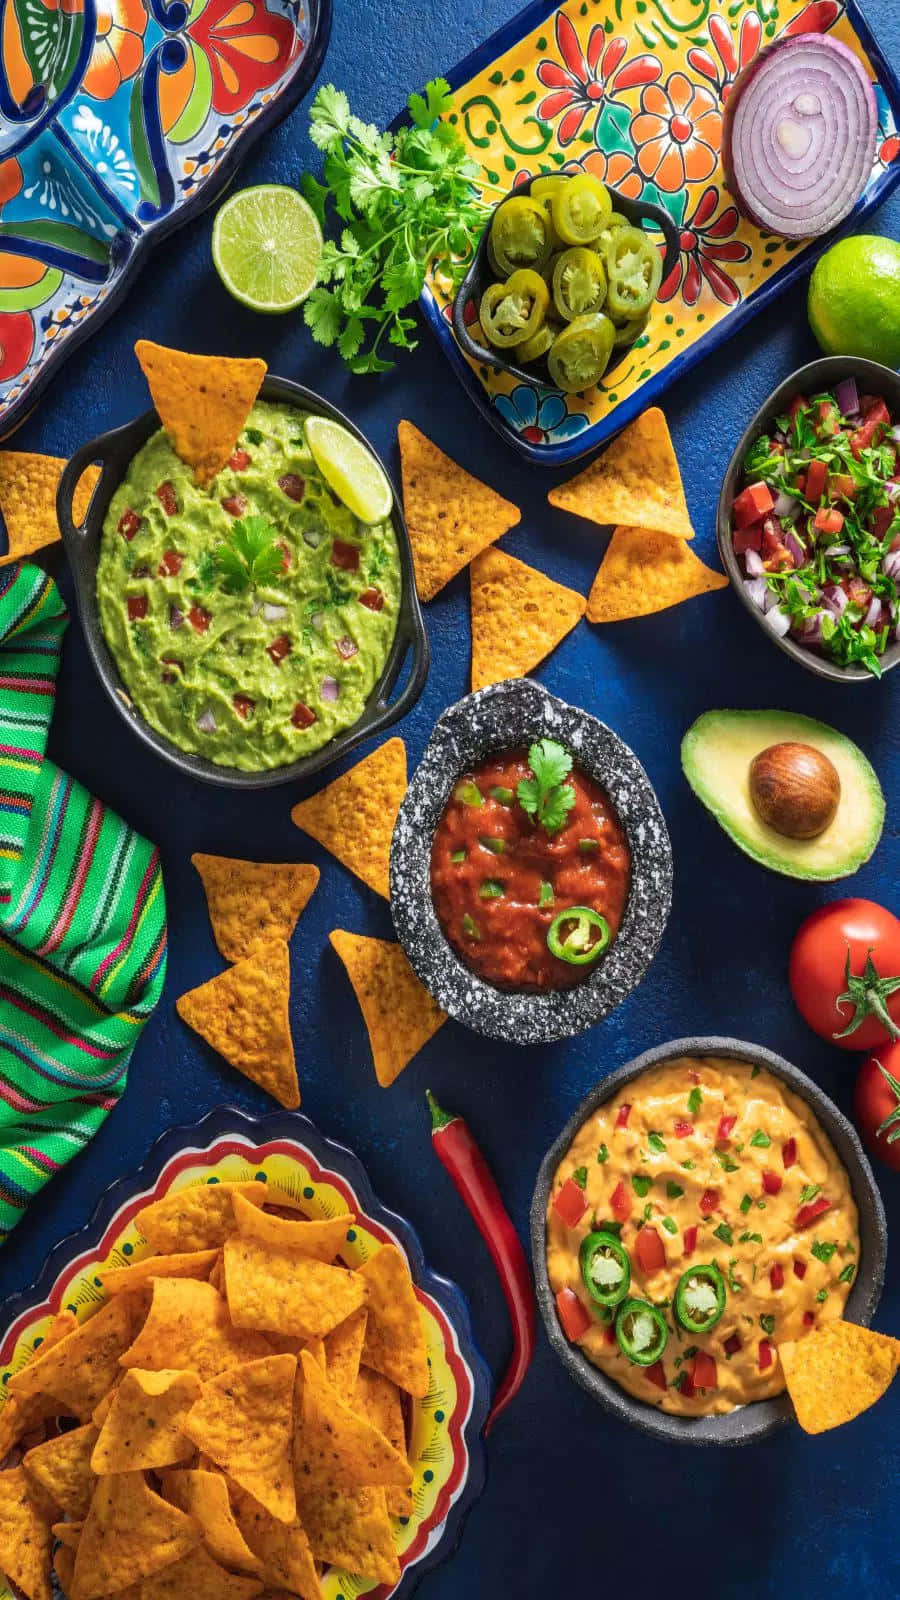 Enjoy delicious Mexican cuisine!